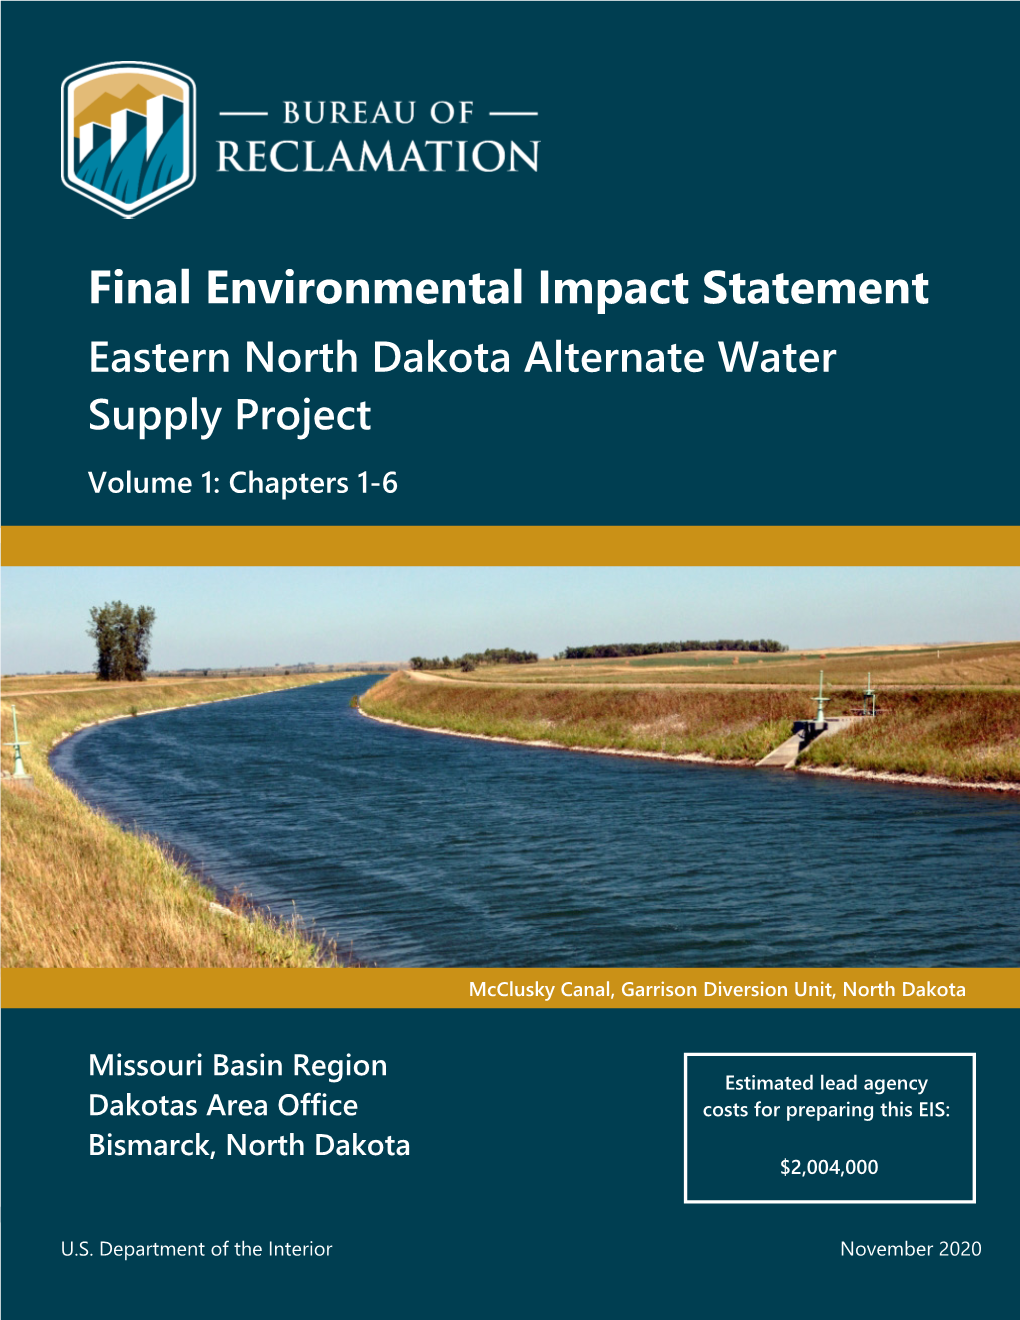 Final Environmental Impact Statement, Eastern North Dakota